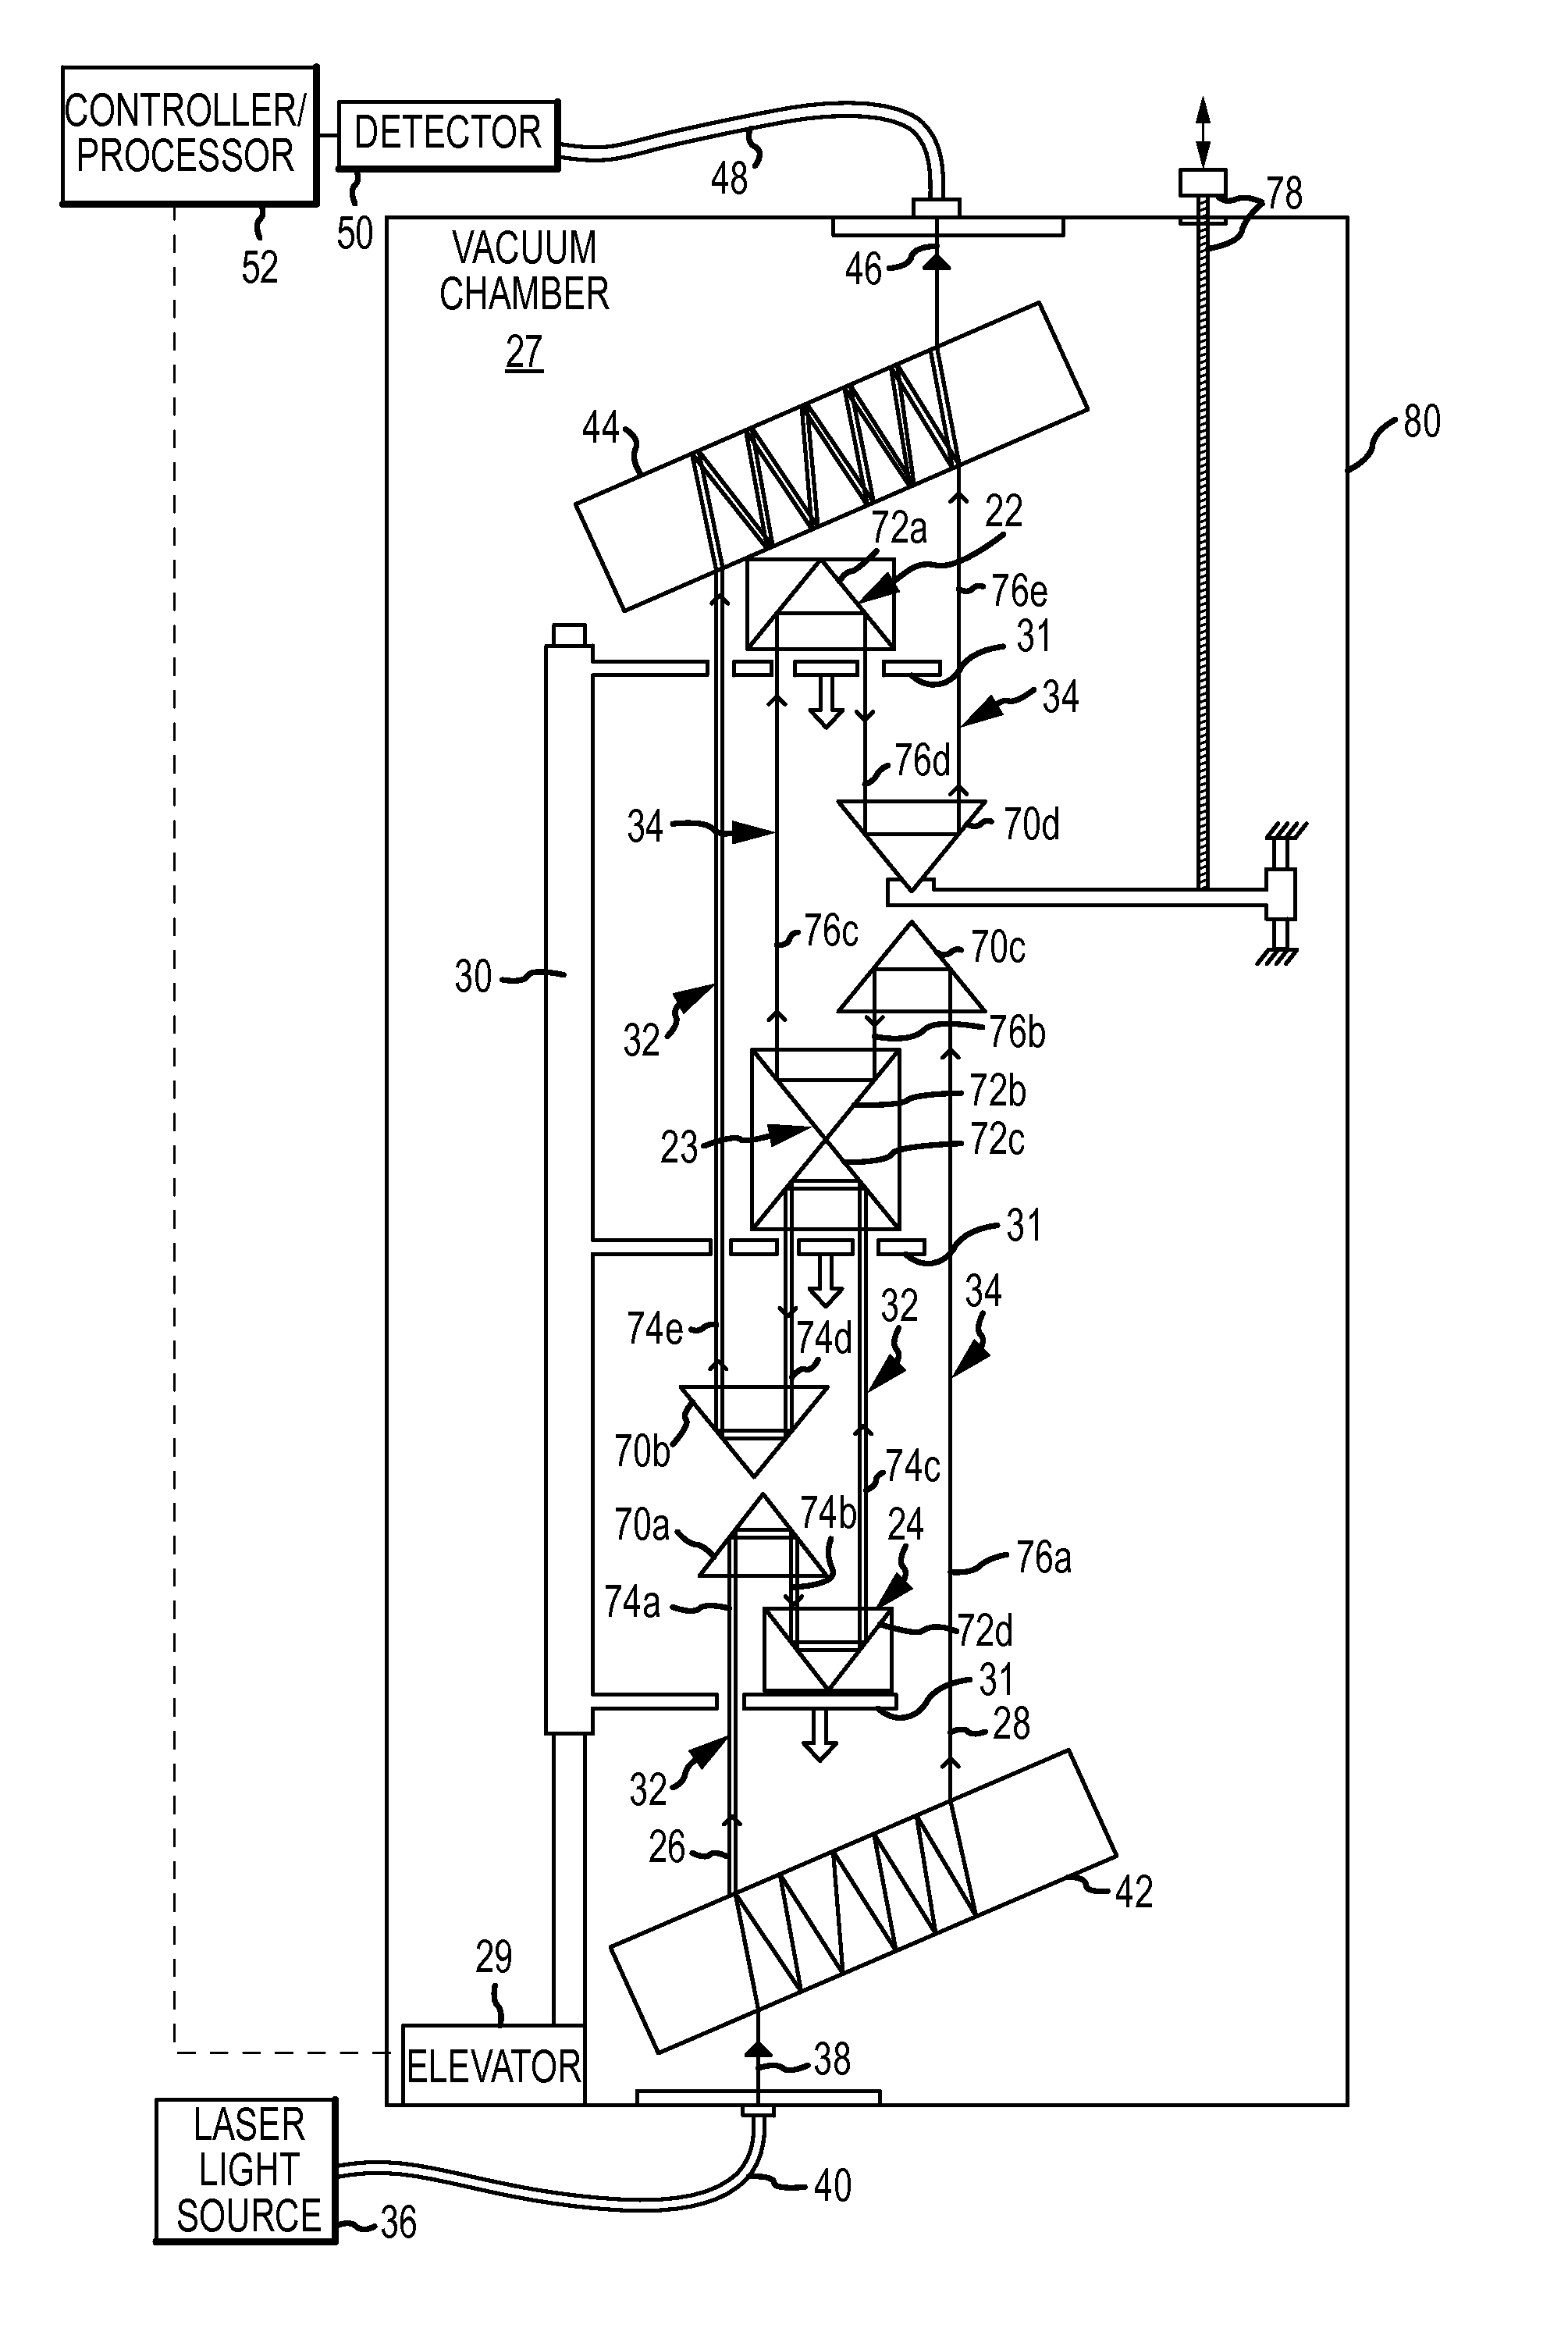 Interferometric Differential Gradiometer Apparatus and Method